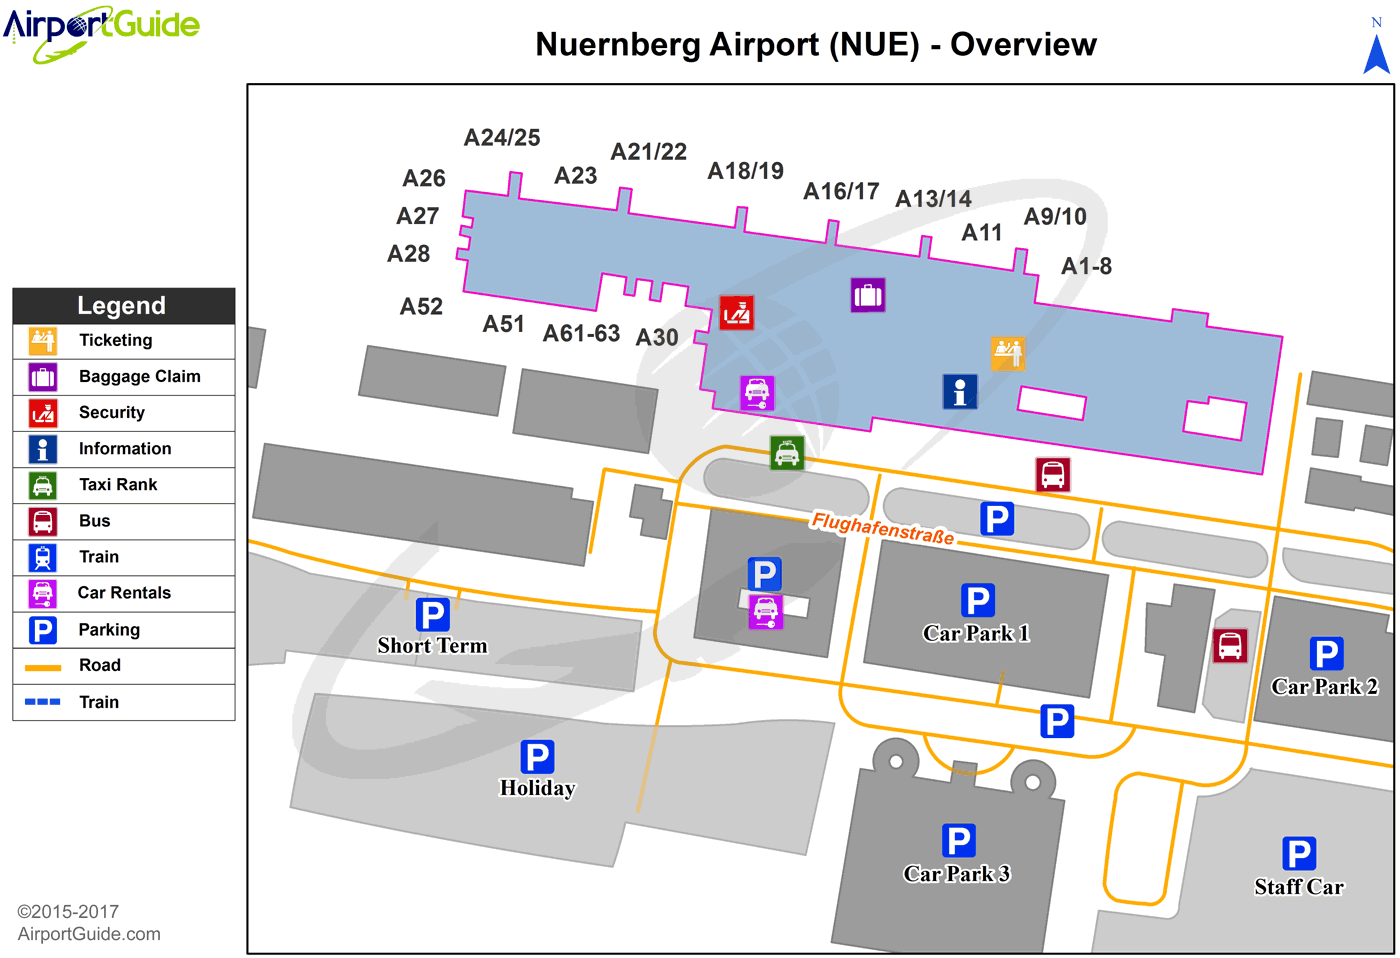 Nuremberg - Nuremberg (NUE) Airport Terminal Map - Overview